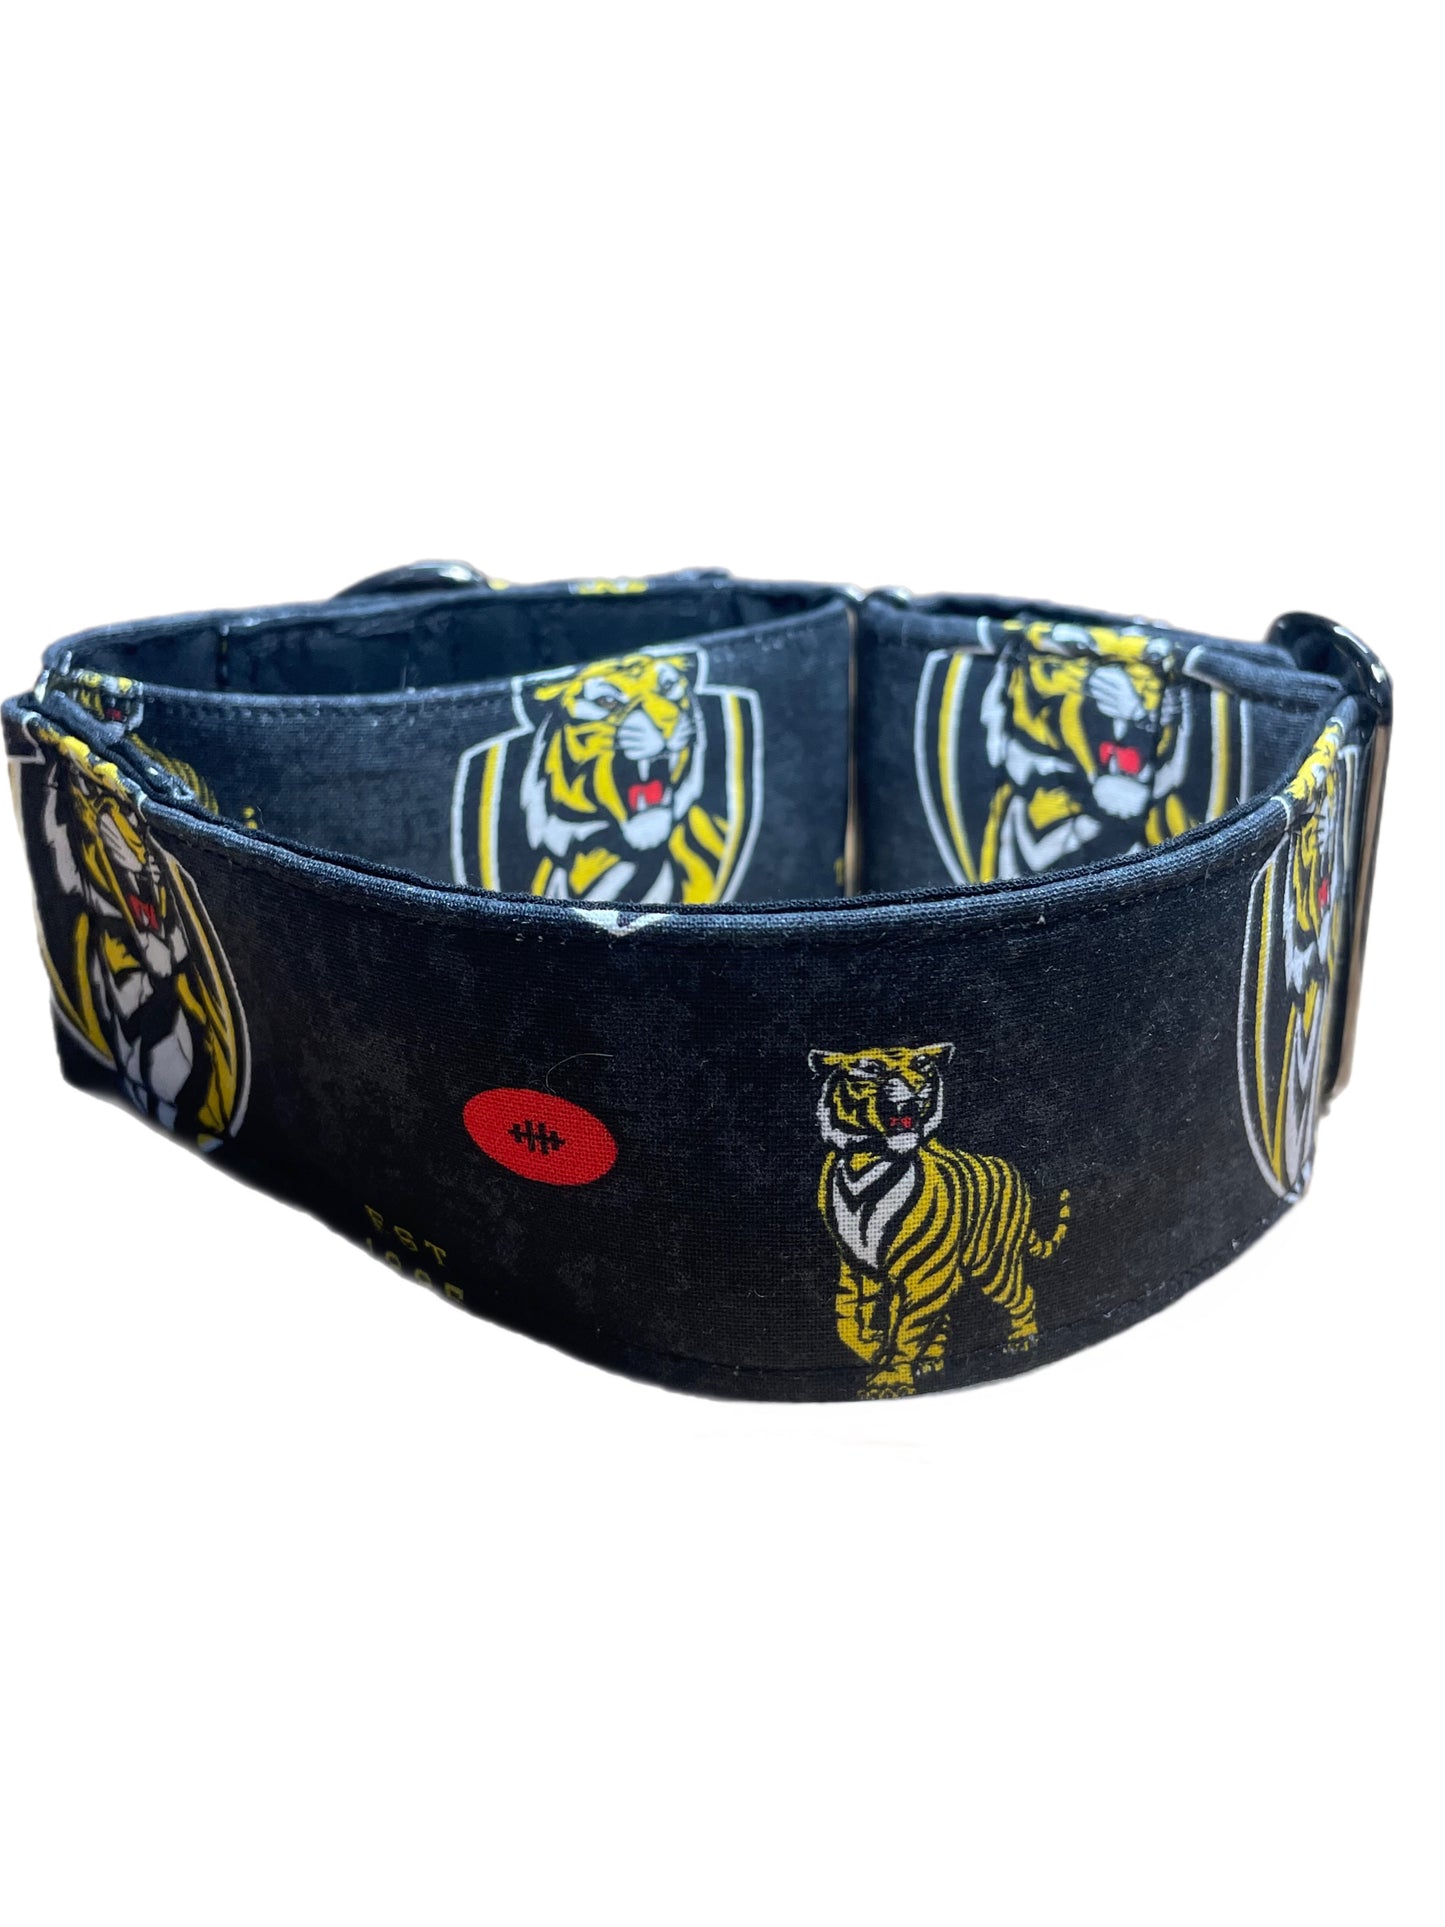 Martingale collar greyhound collar AFL Richmond Tigers footy cotton fabric